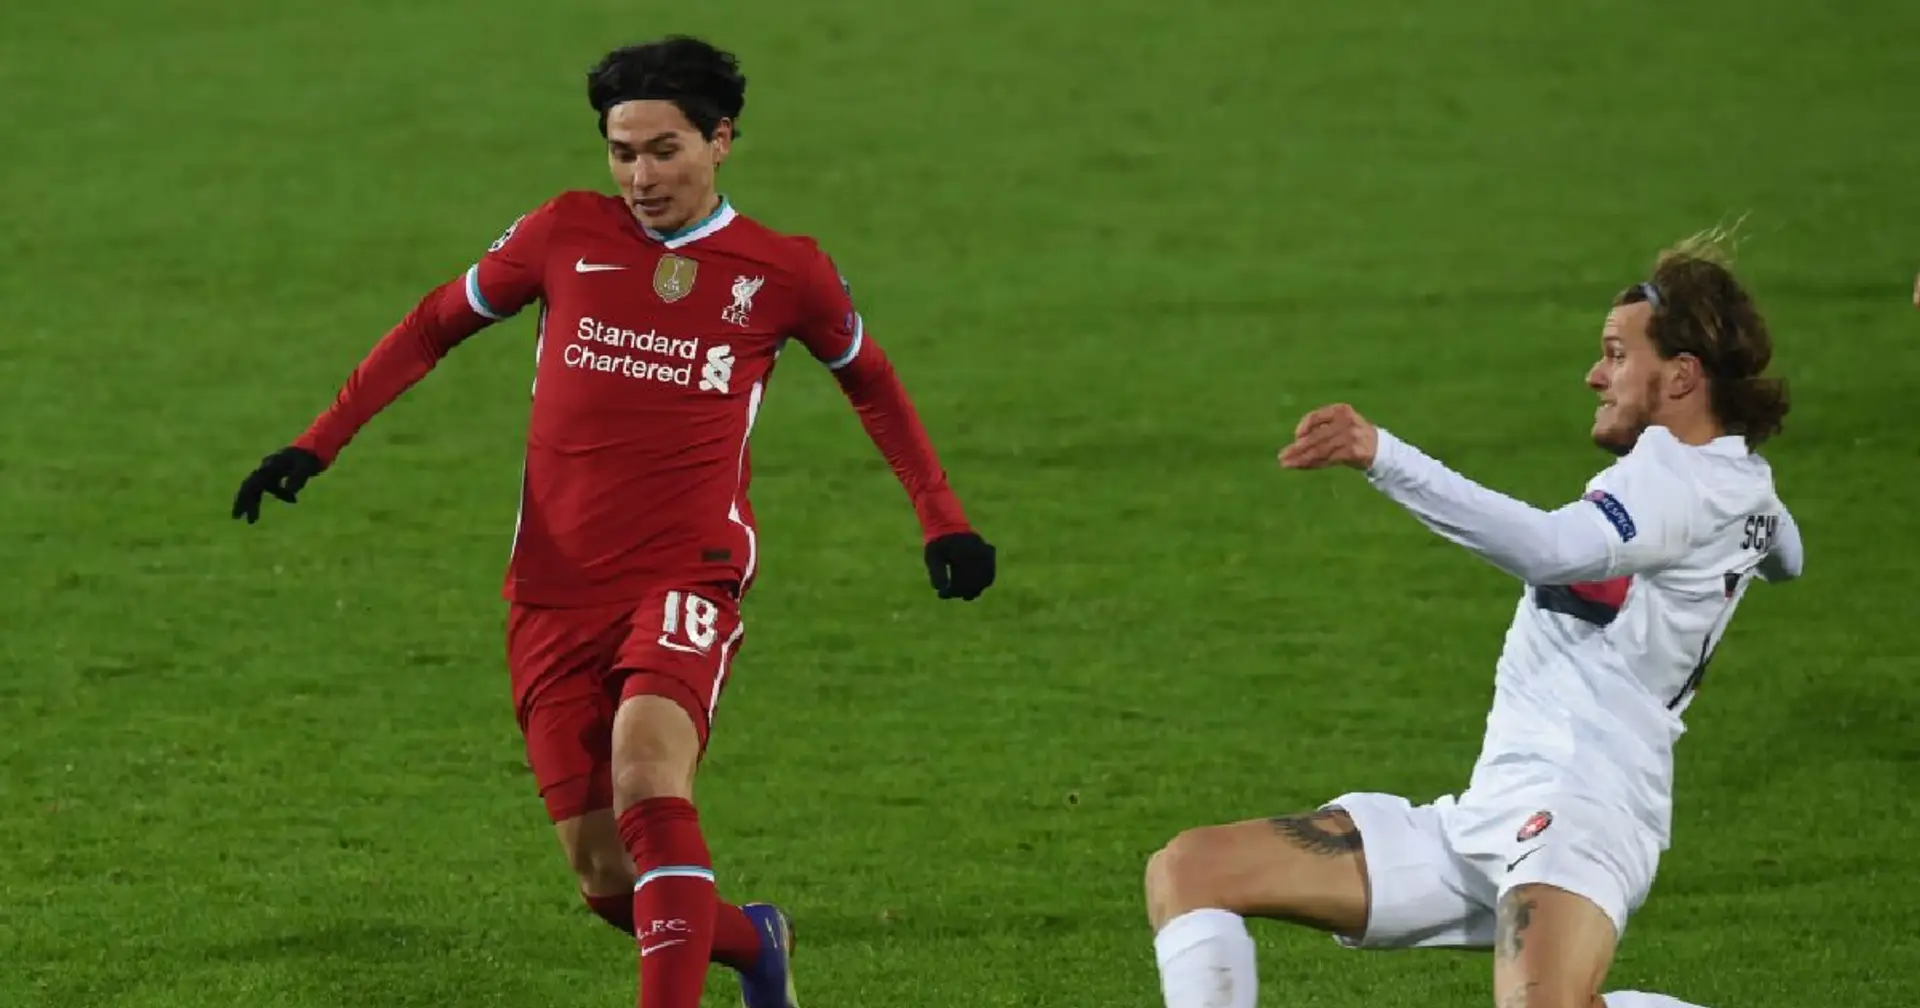 Pressing machine: Minamino set pressing record for Liverpool this season in Midtjylland draw